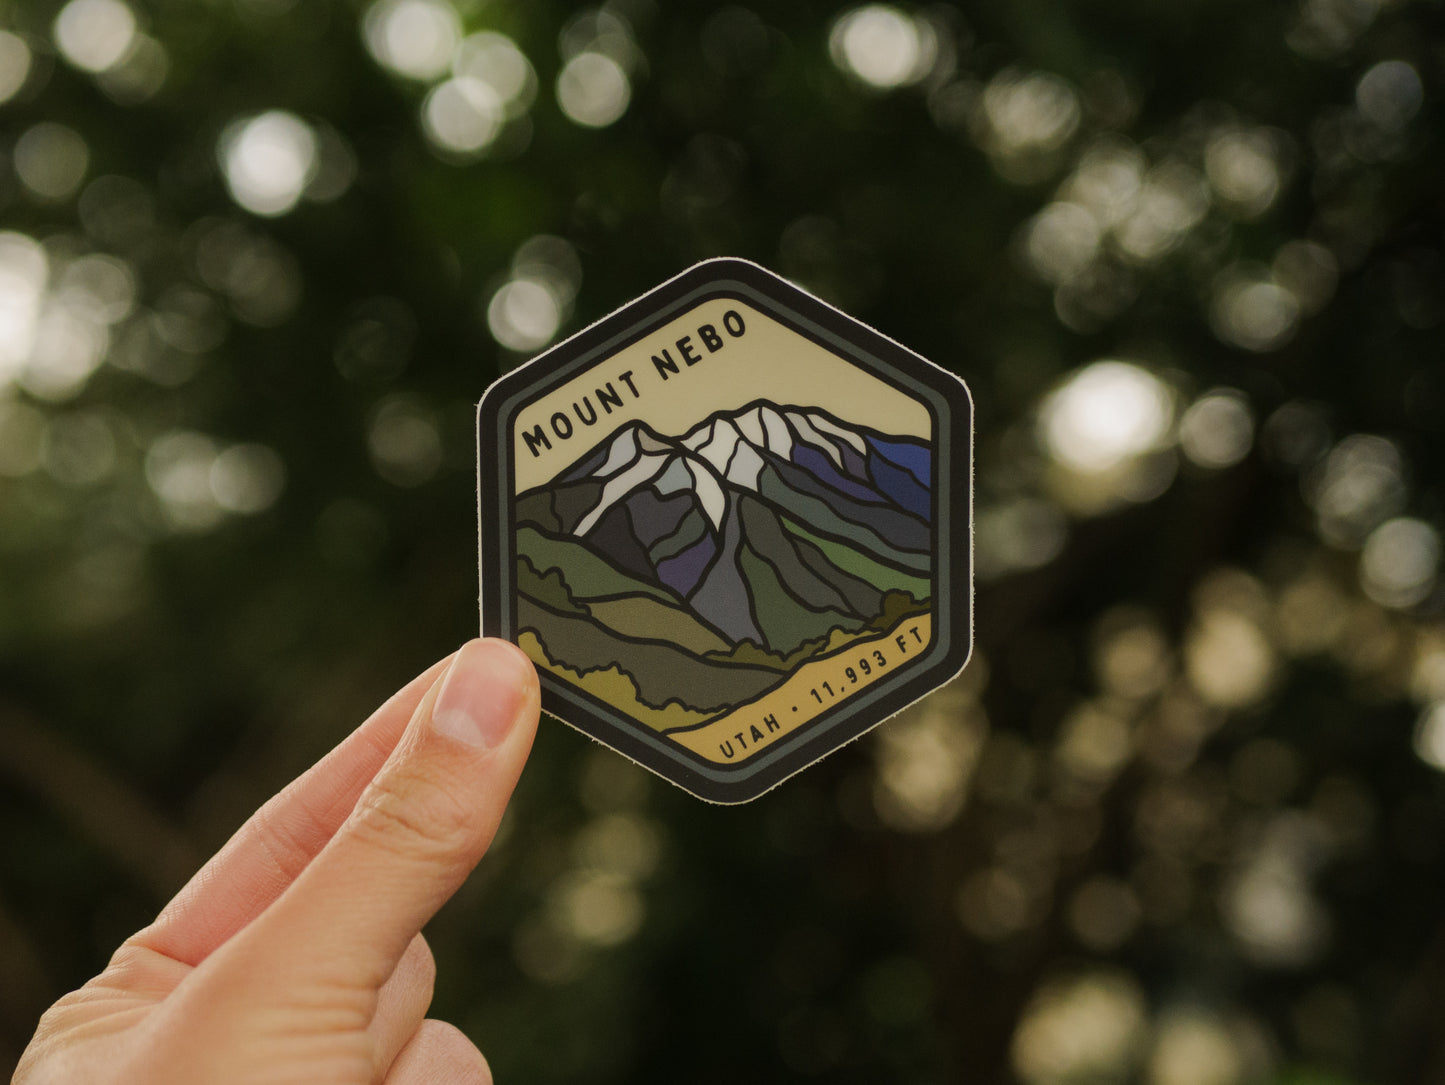 Mount Nebo | Sticker